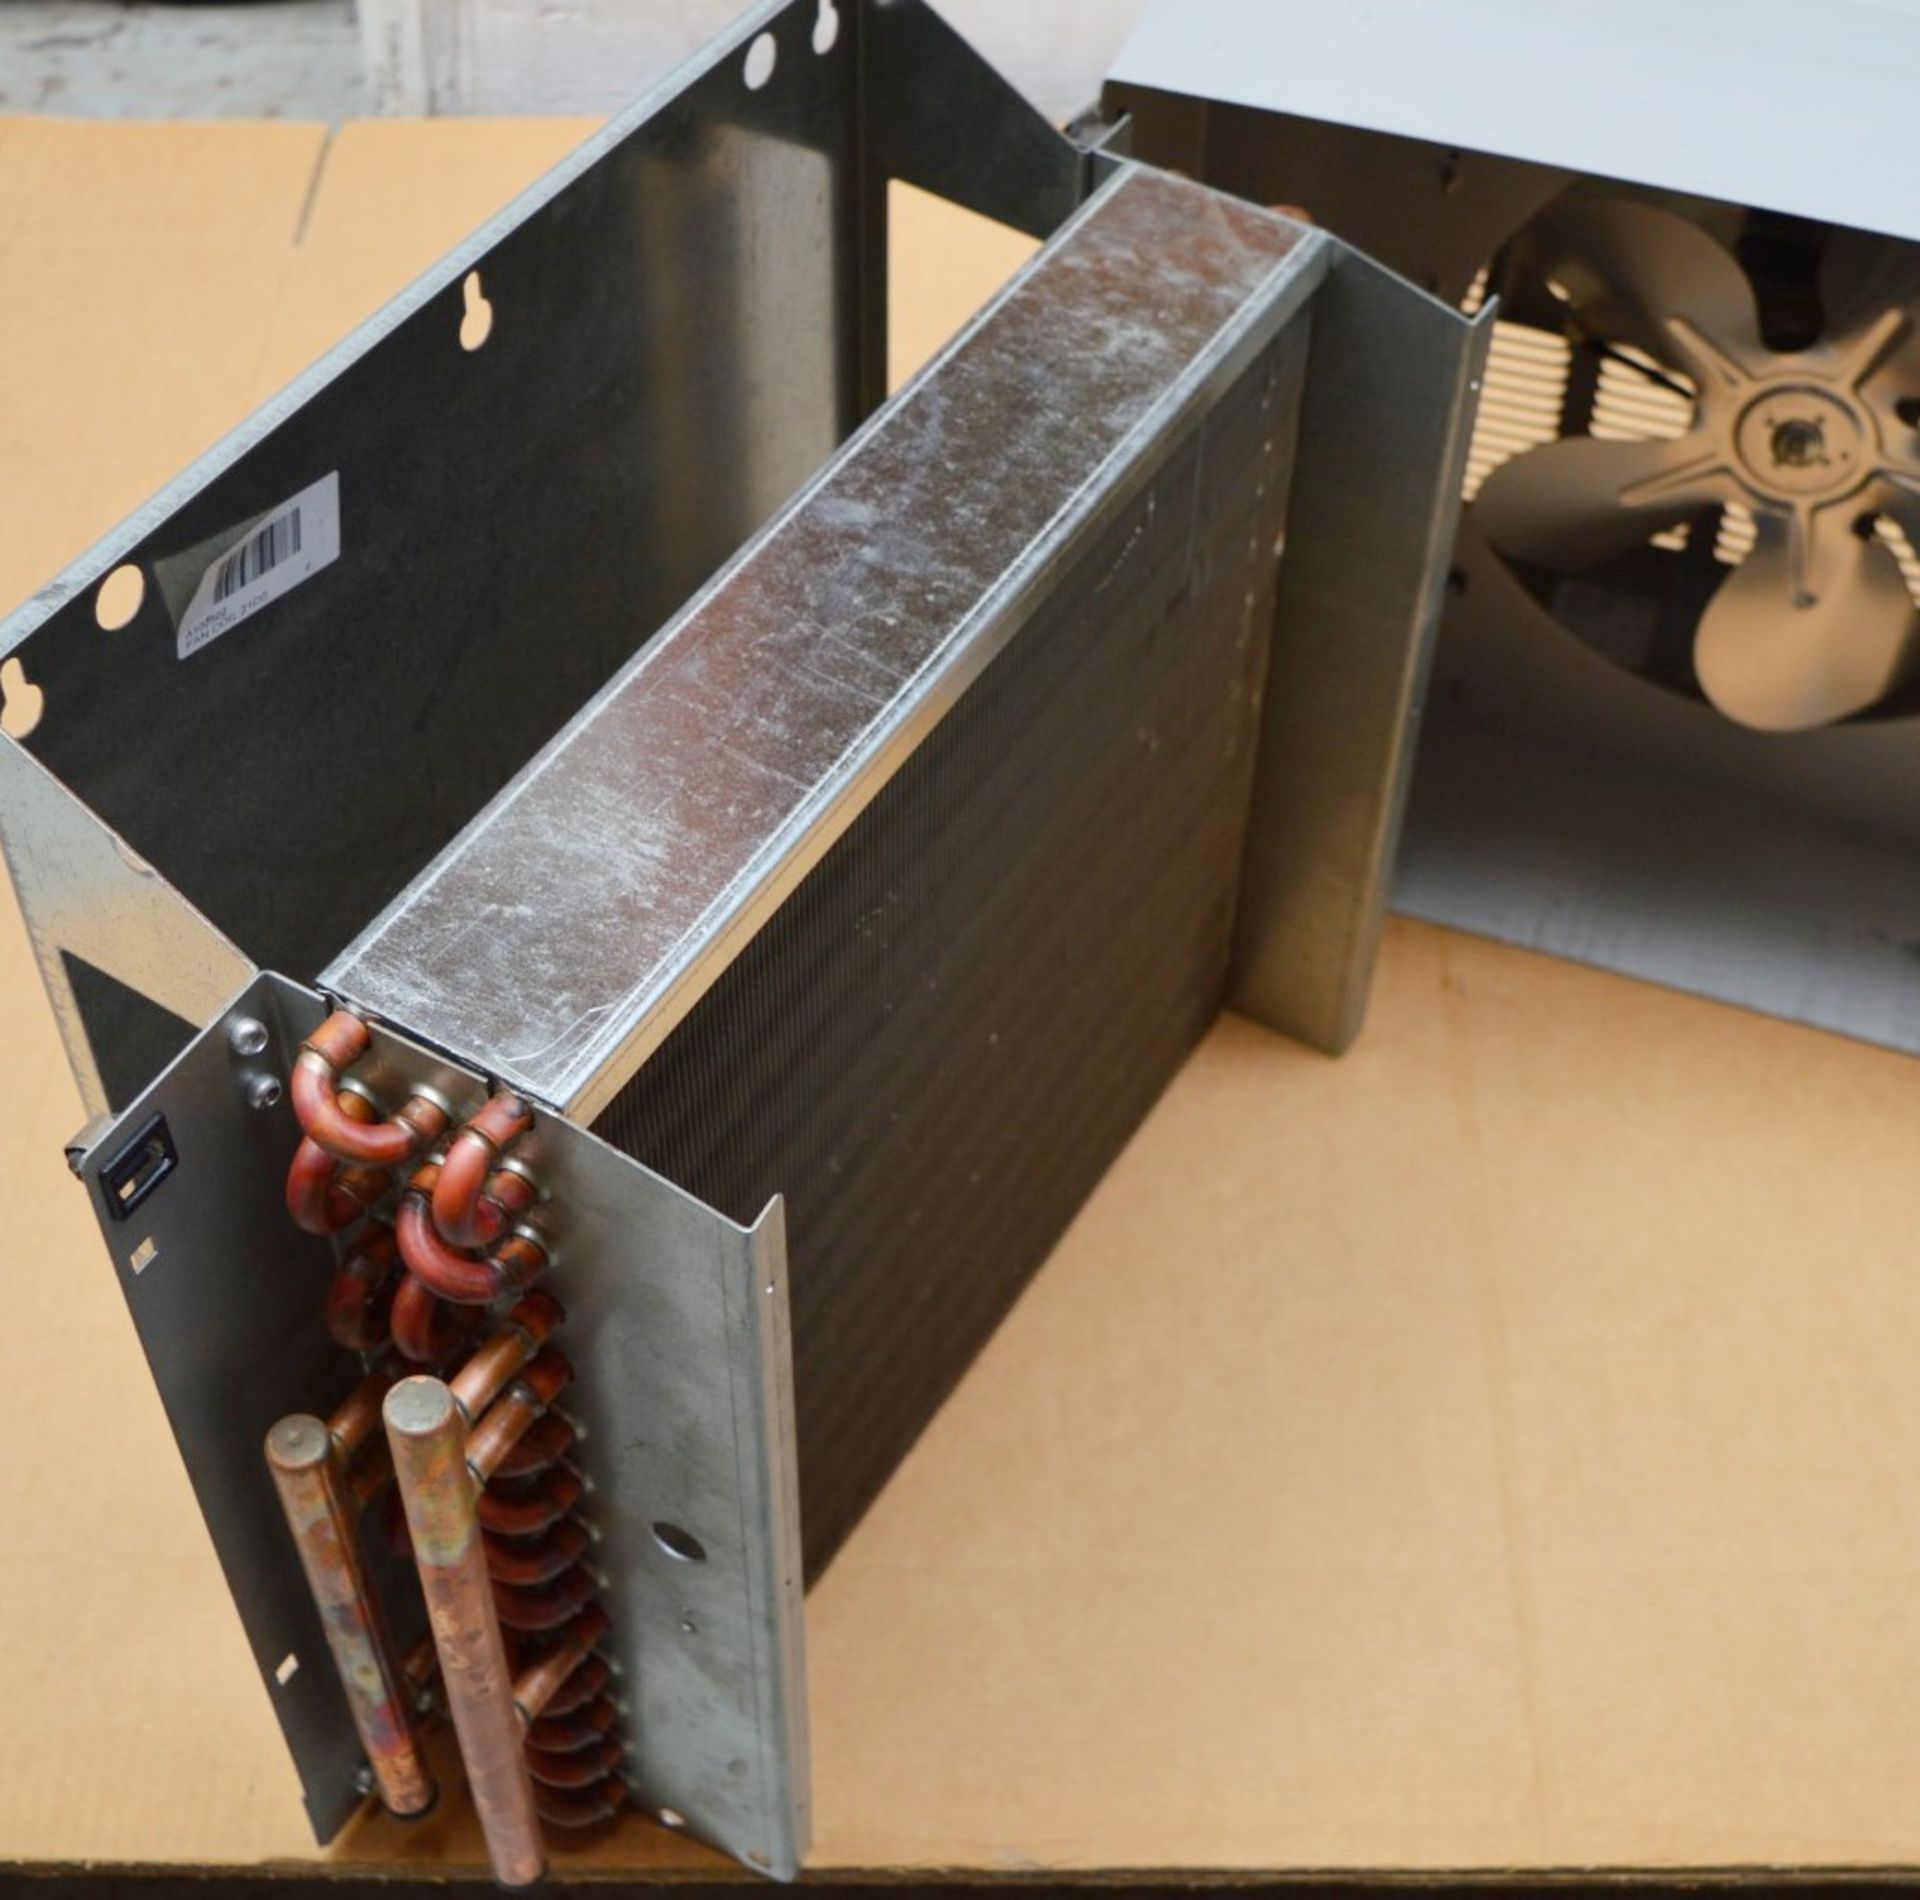 1 x Cornelius Heat Dump Unit For Cooled Split Cooling Systems - Model 061100502H - CL011 - Ref IT241 - Image 3 of 8